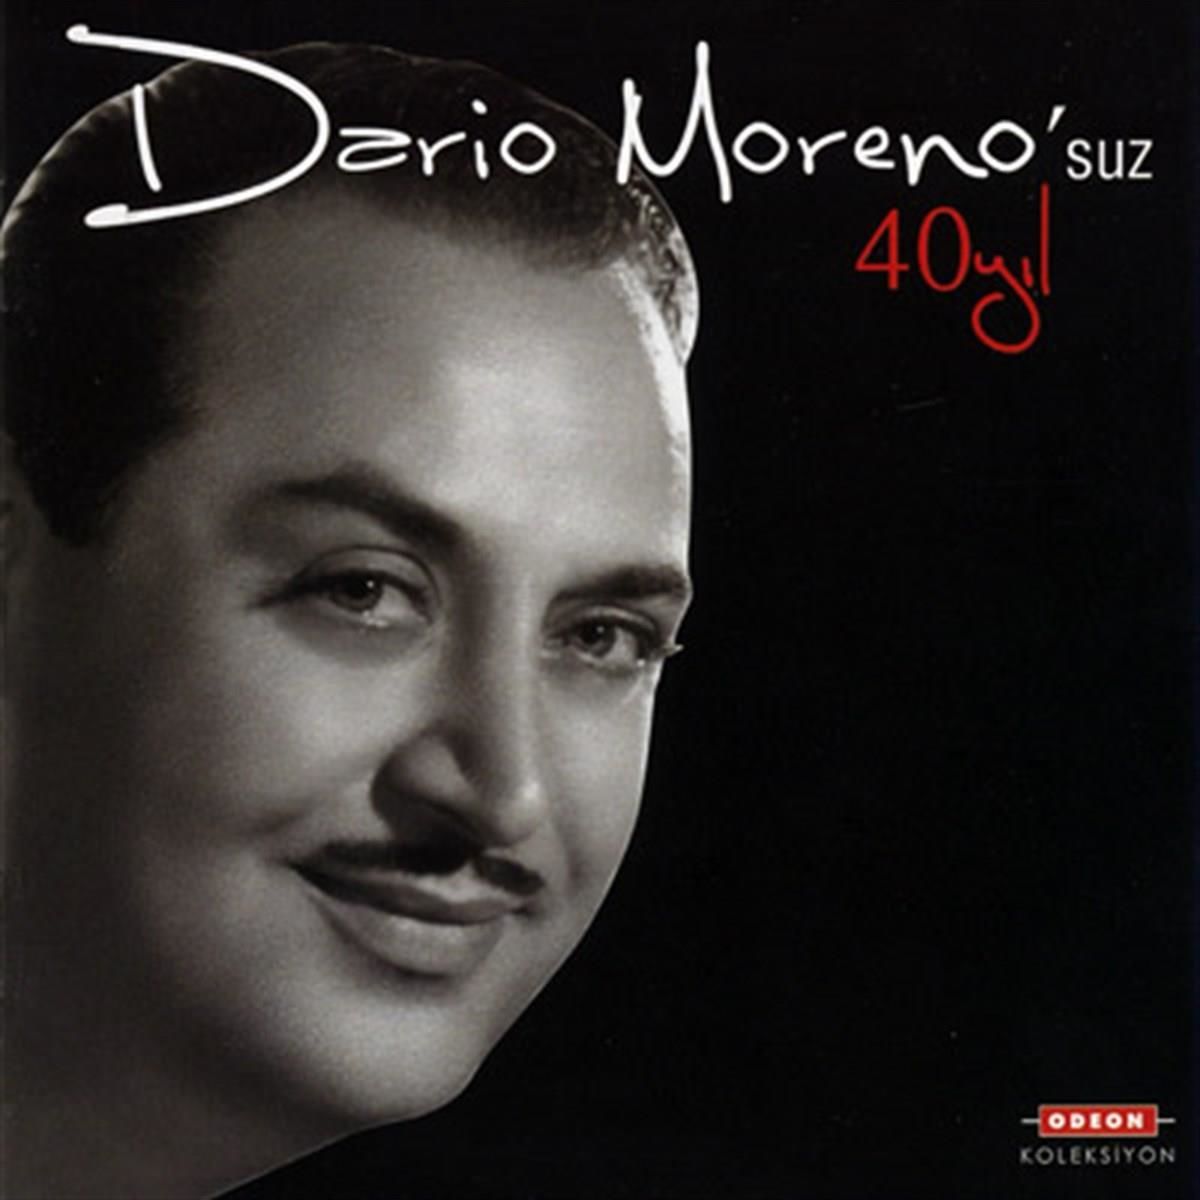 DARIO MORENO - DARIO MORENO'SUZ 40 YIL (CD) (2008)